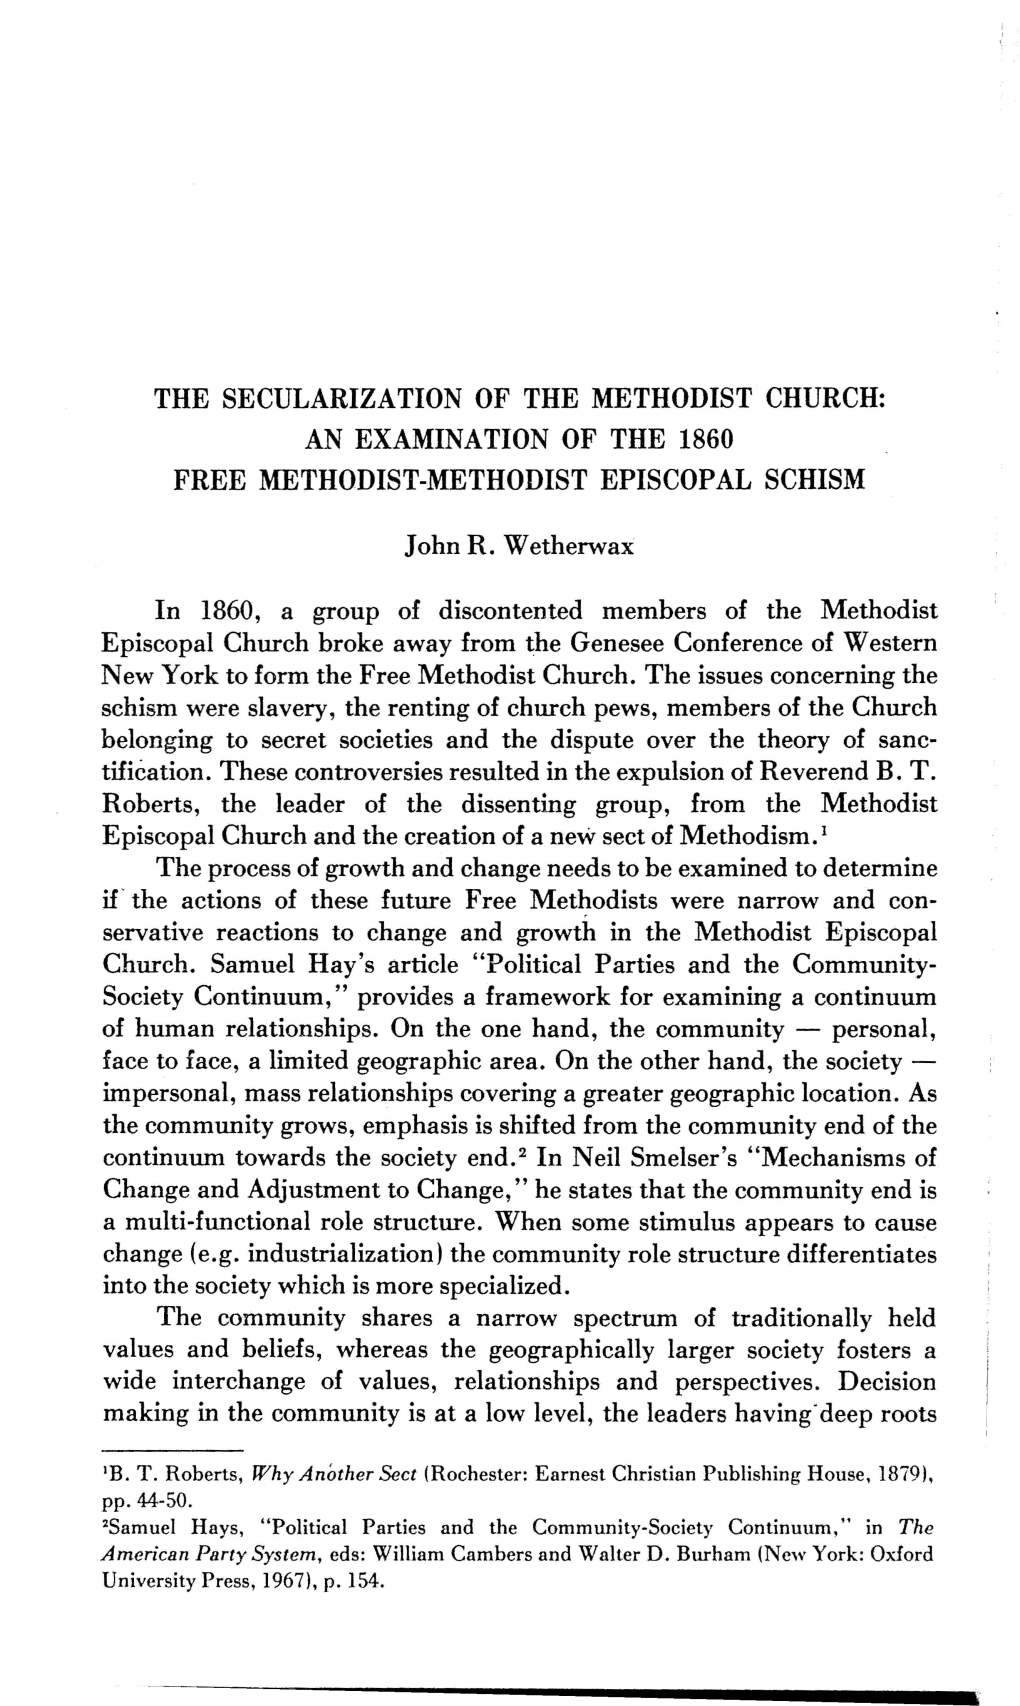 An Examination of the 1860 Free Methodist-Methodist Episcopal Schism